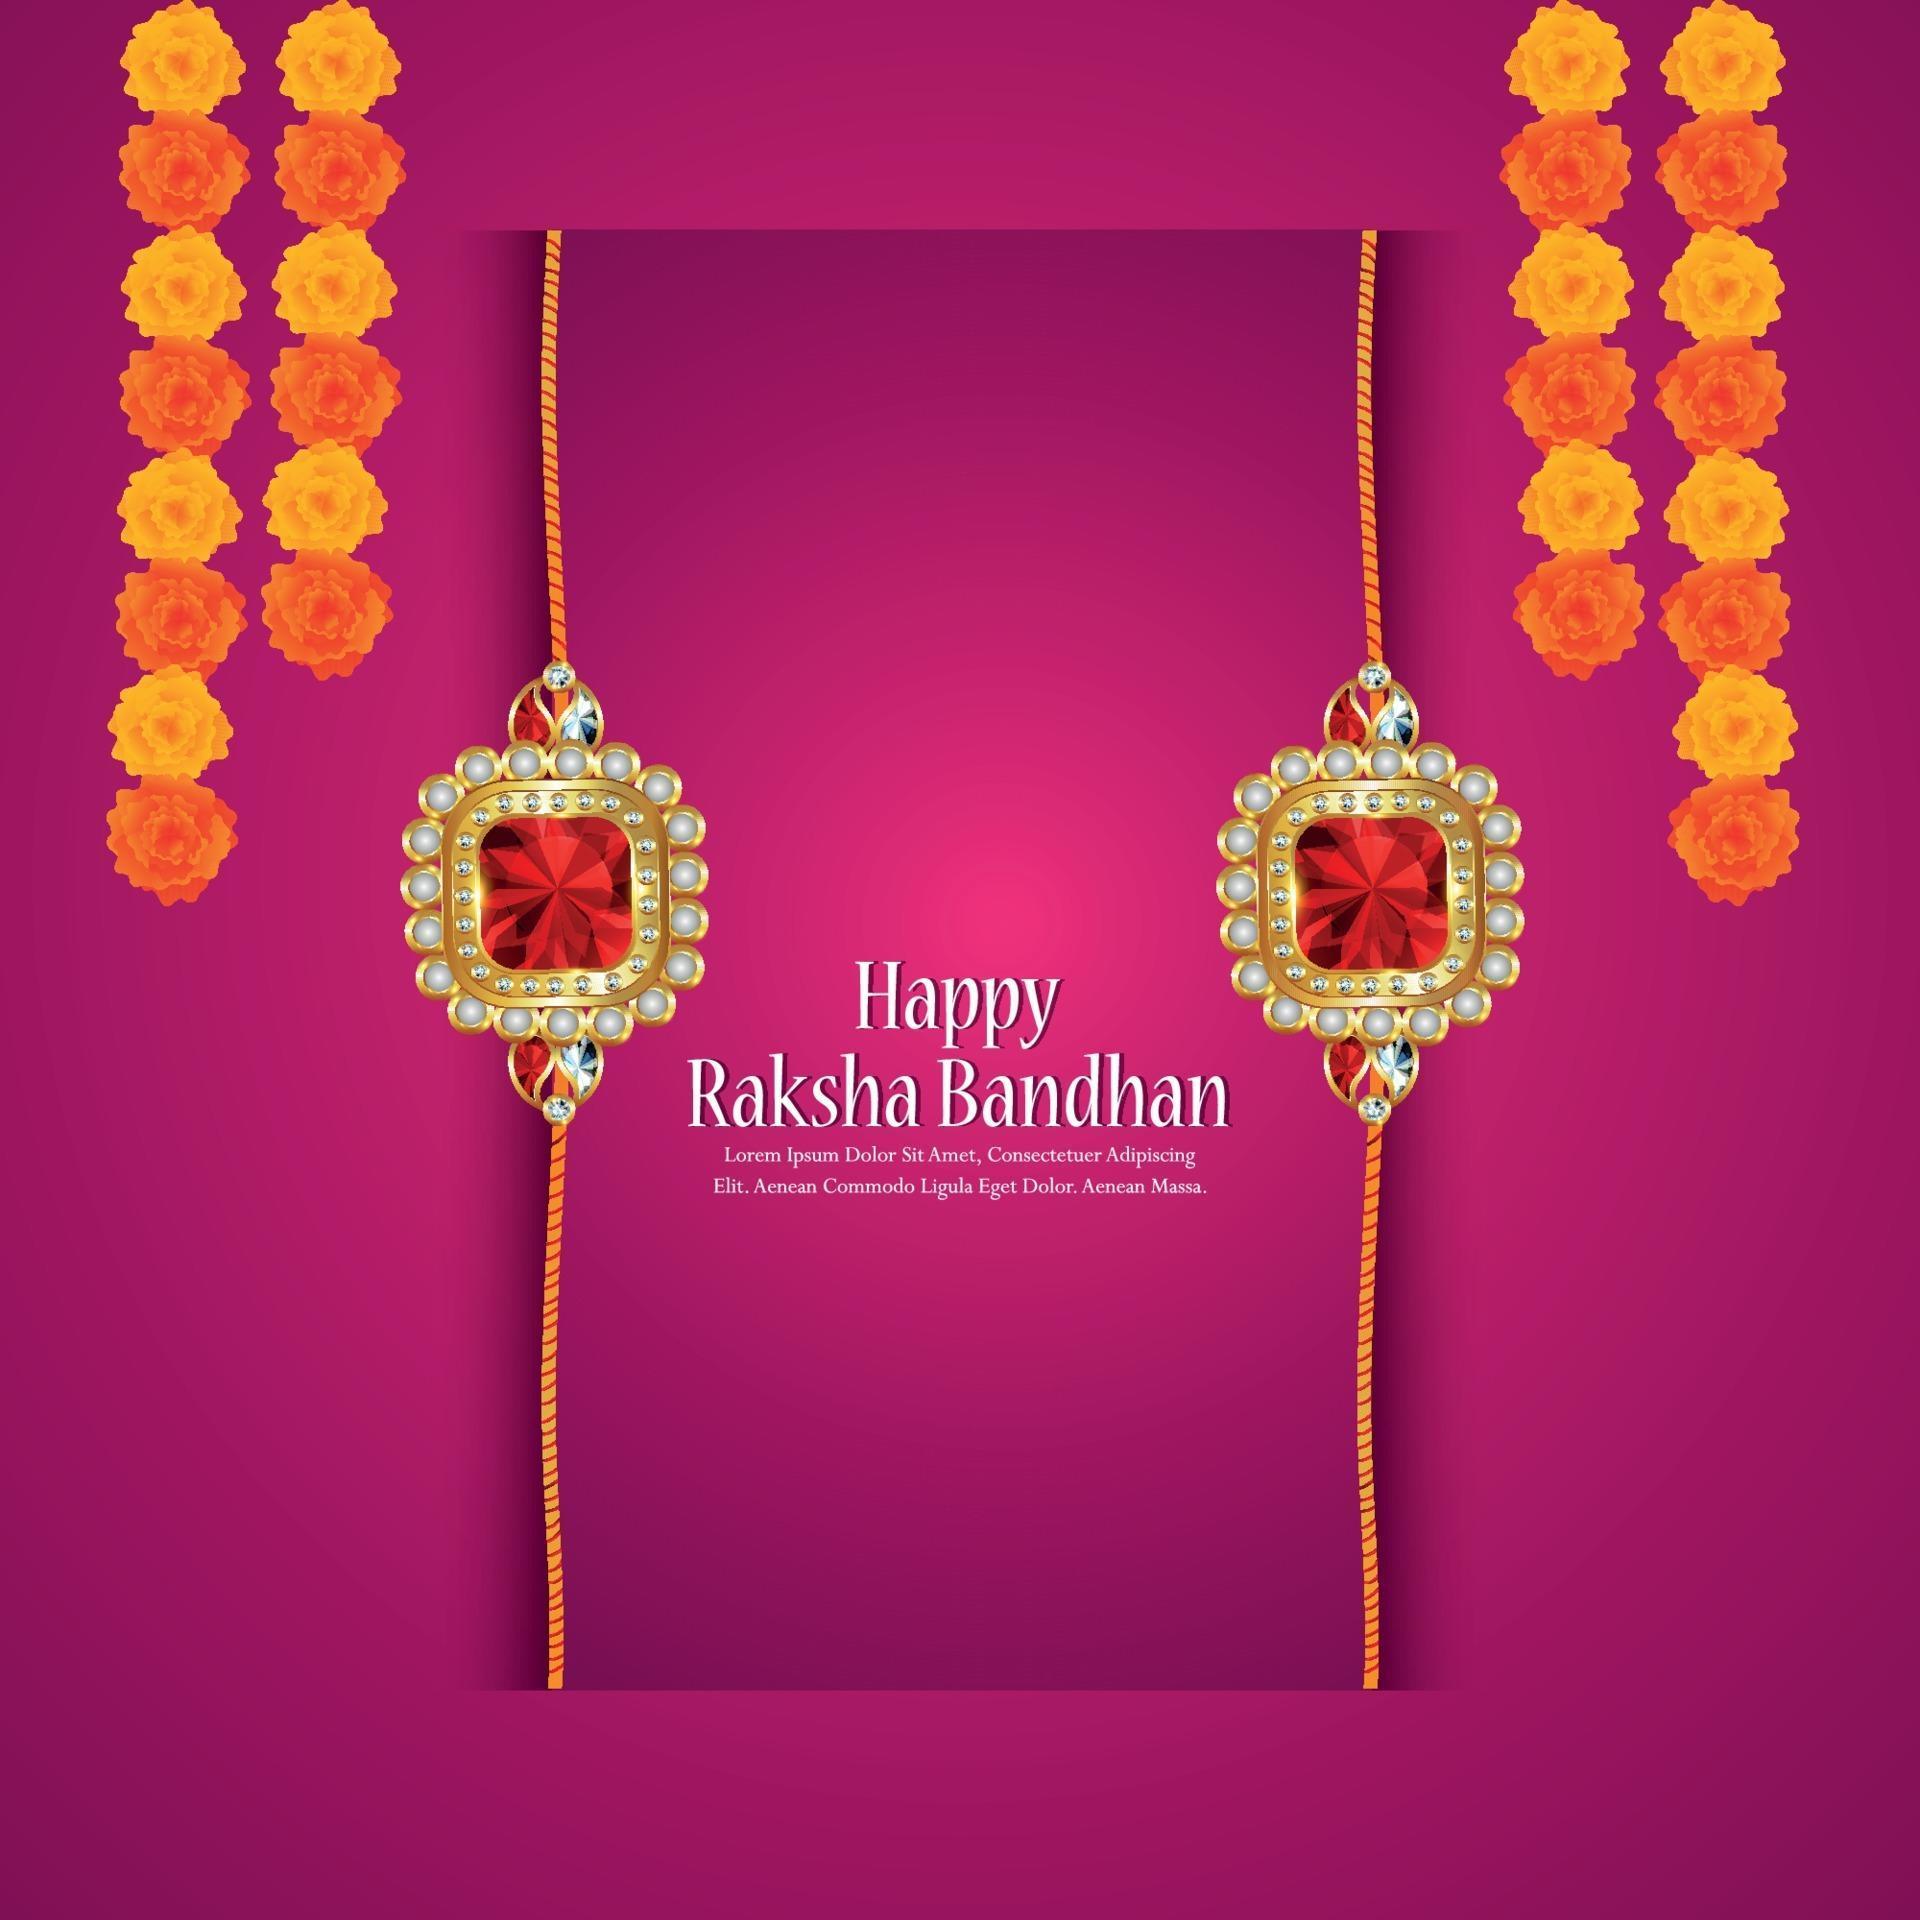 raksha-bandhan-invitation-greeting-card-with-golden-crystal-rakhi